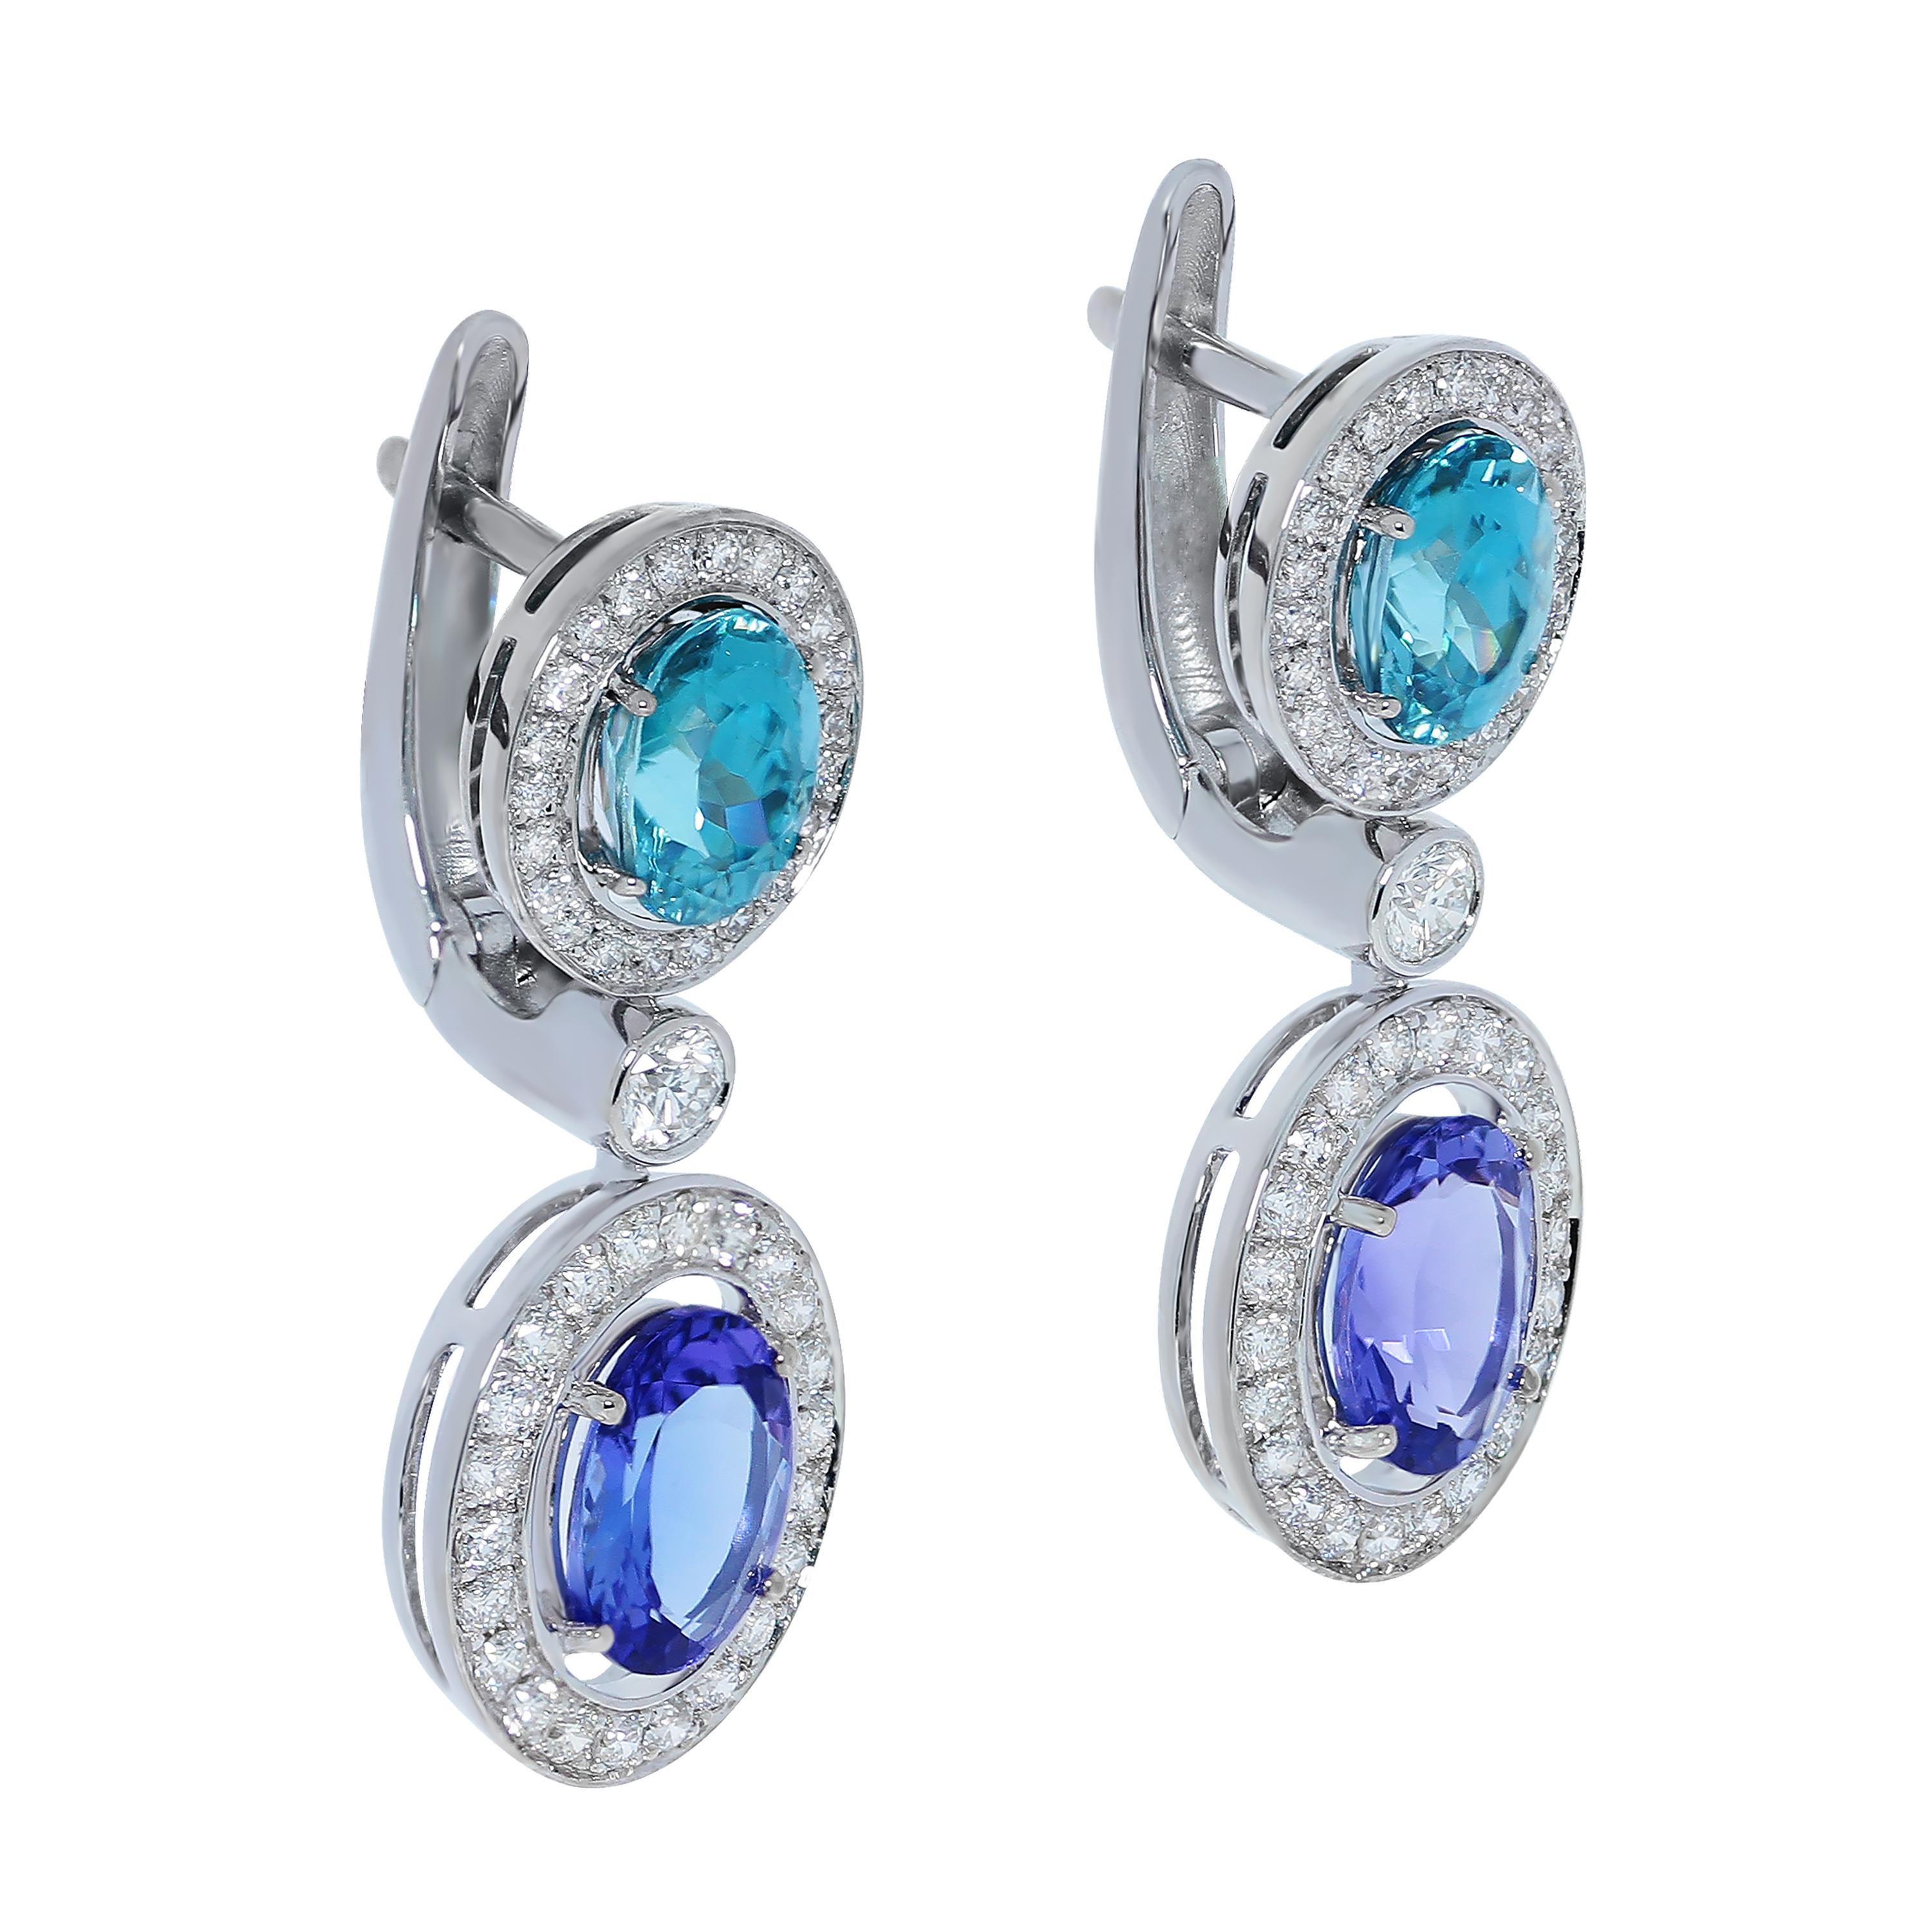 Tanzanite Zircon Diamond 18 Karat White Gold Earrings
Radiantly sparkling Ring from our 